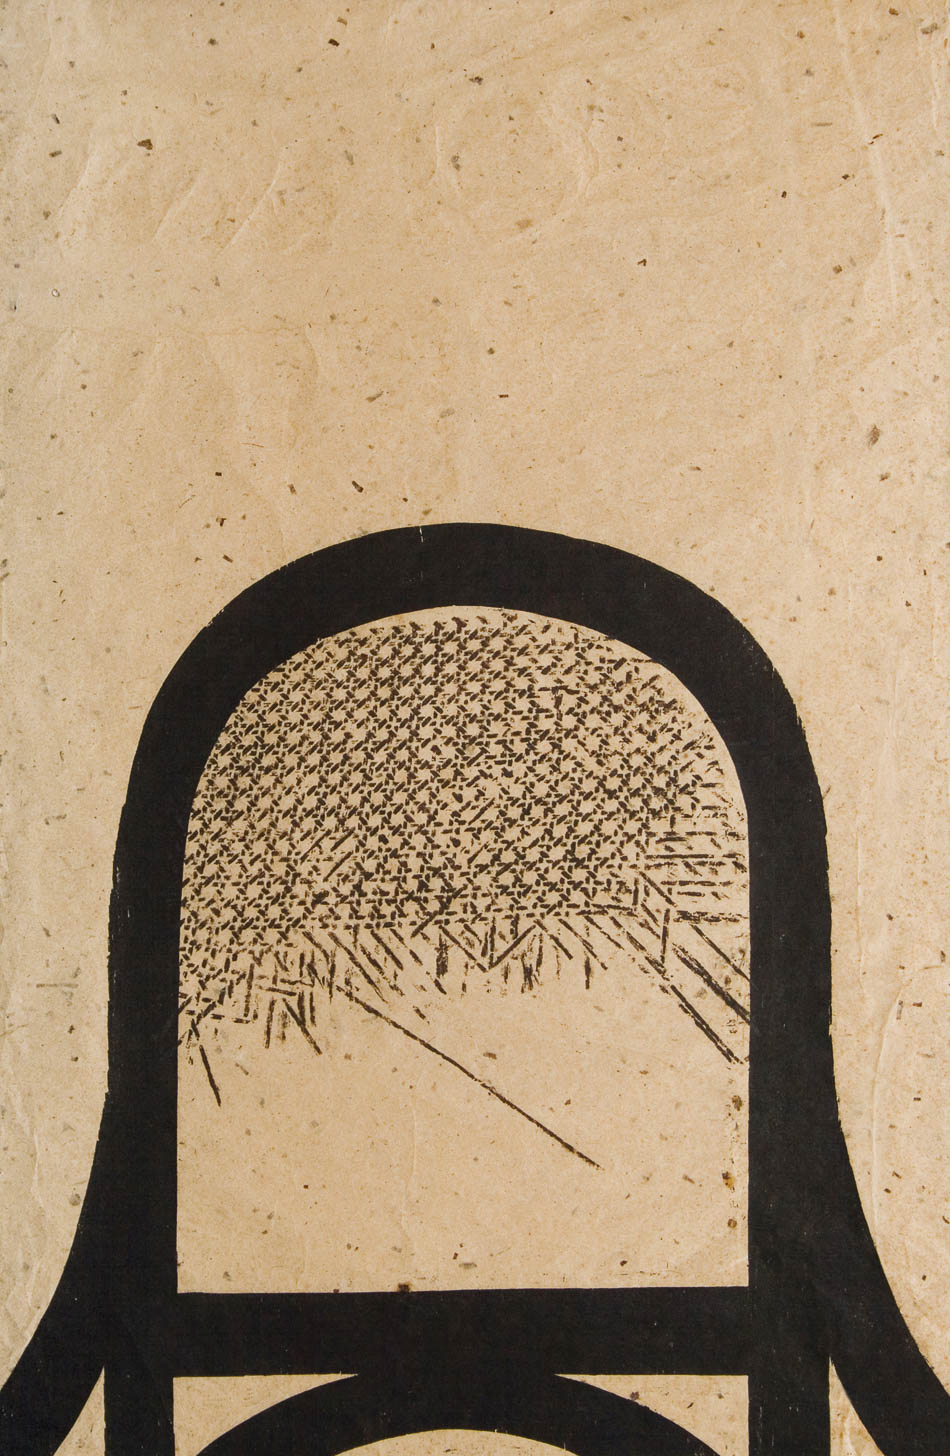 Antonio Martorell (Puerto Rico), Silla (‘Chair’), n.d., edition unknown. Woodcut. 100 x 62 cm